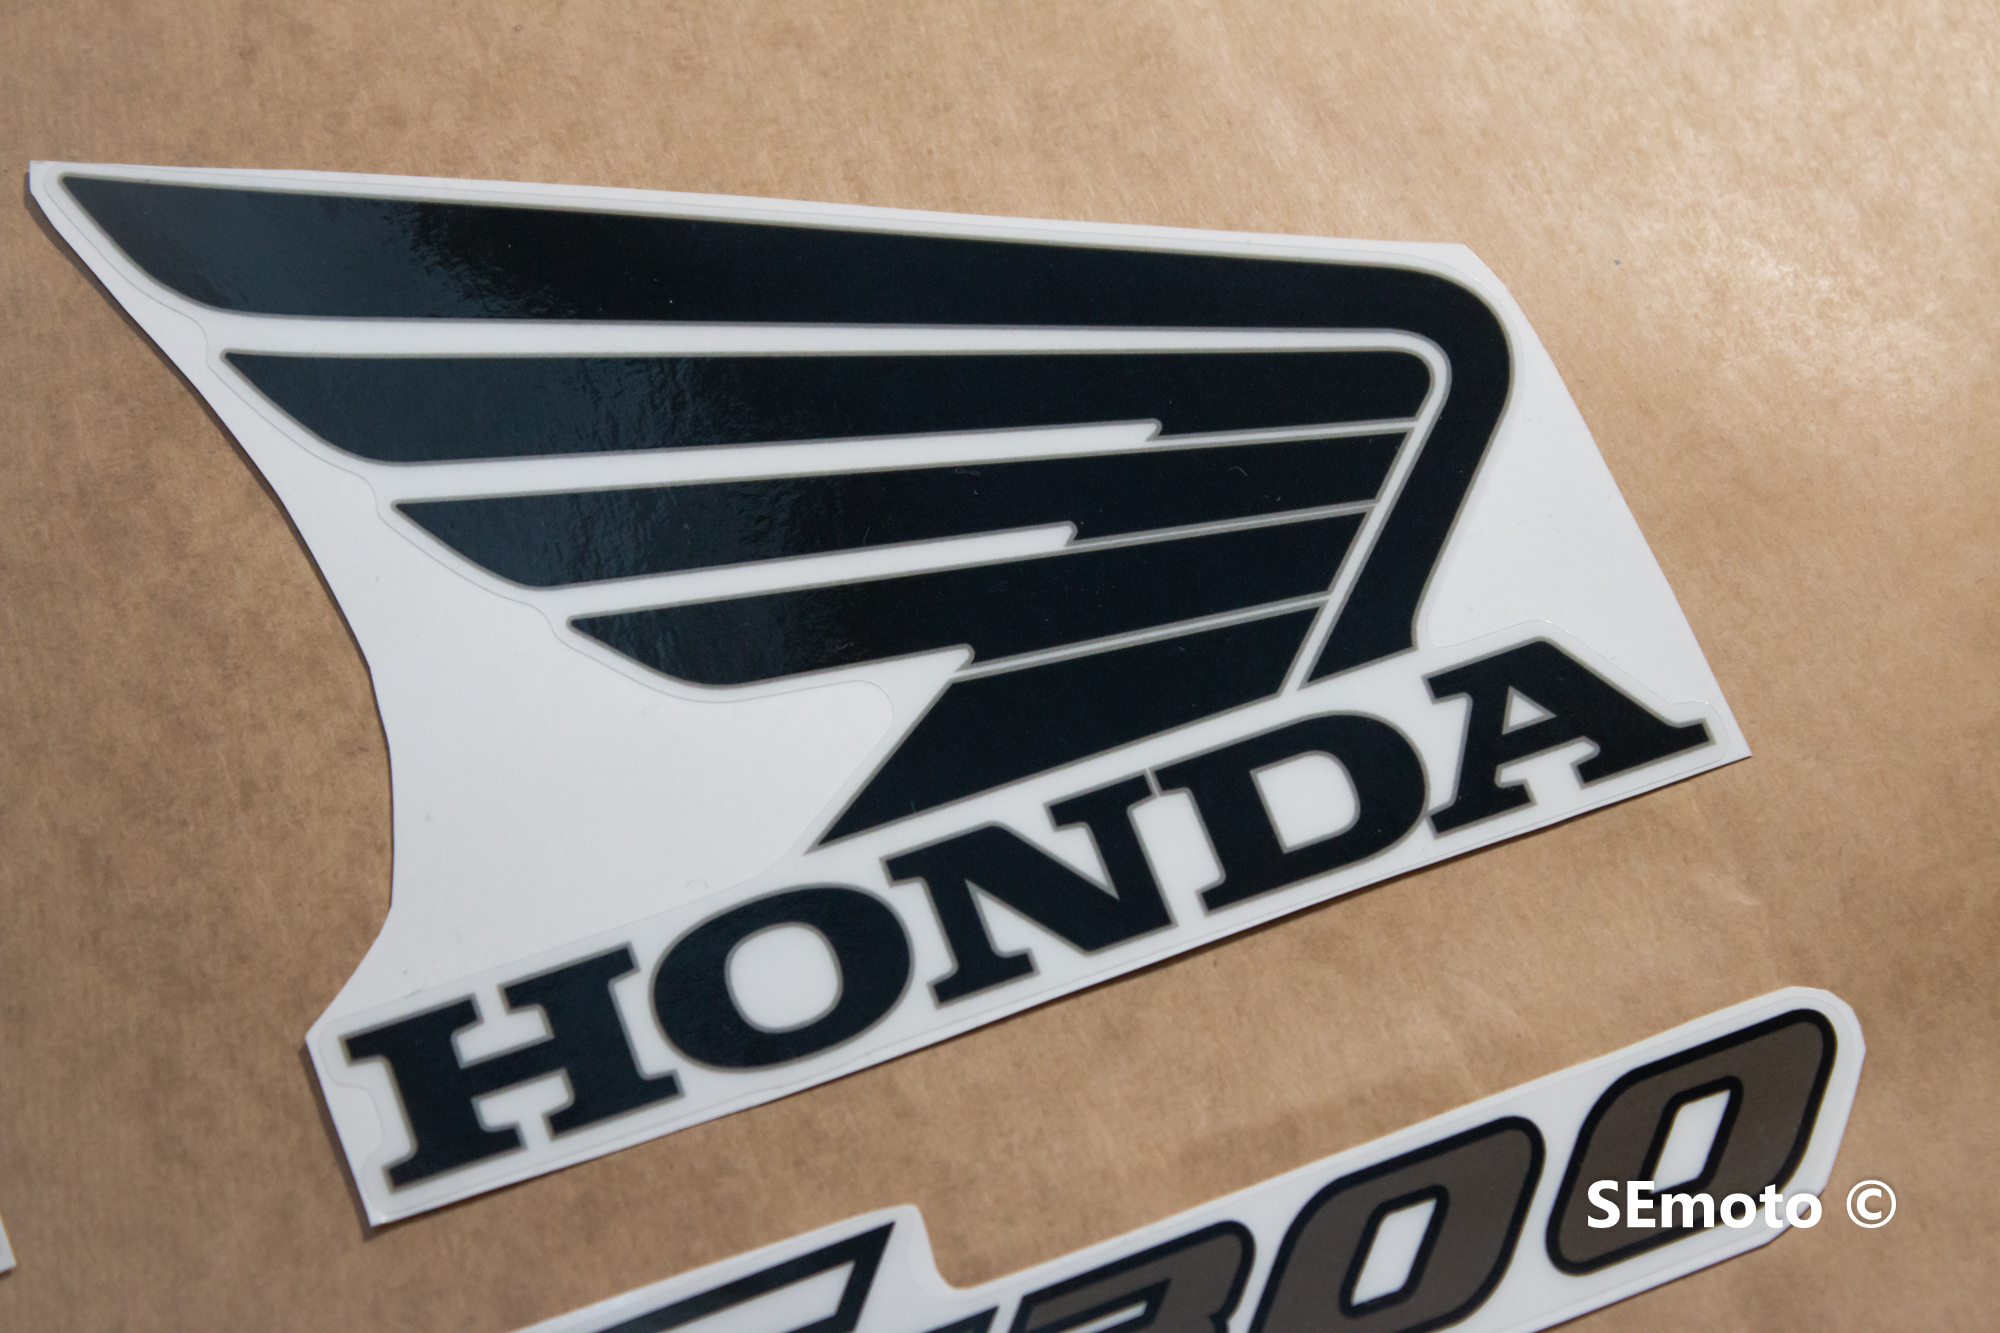 Honda ST 1300 Серебро- фото9